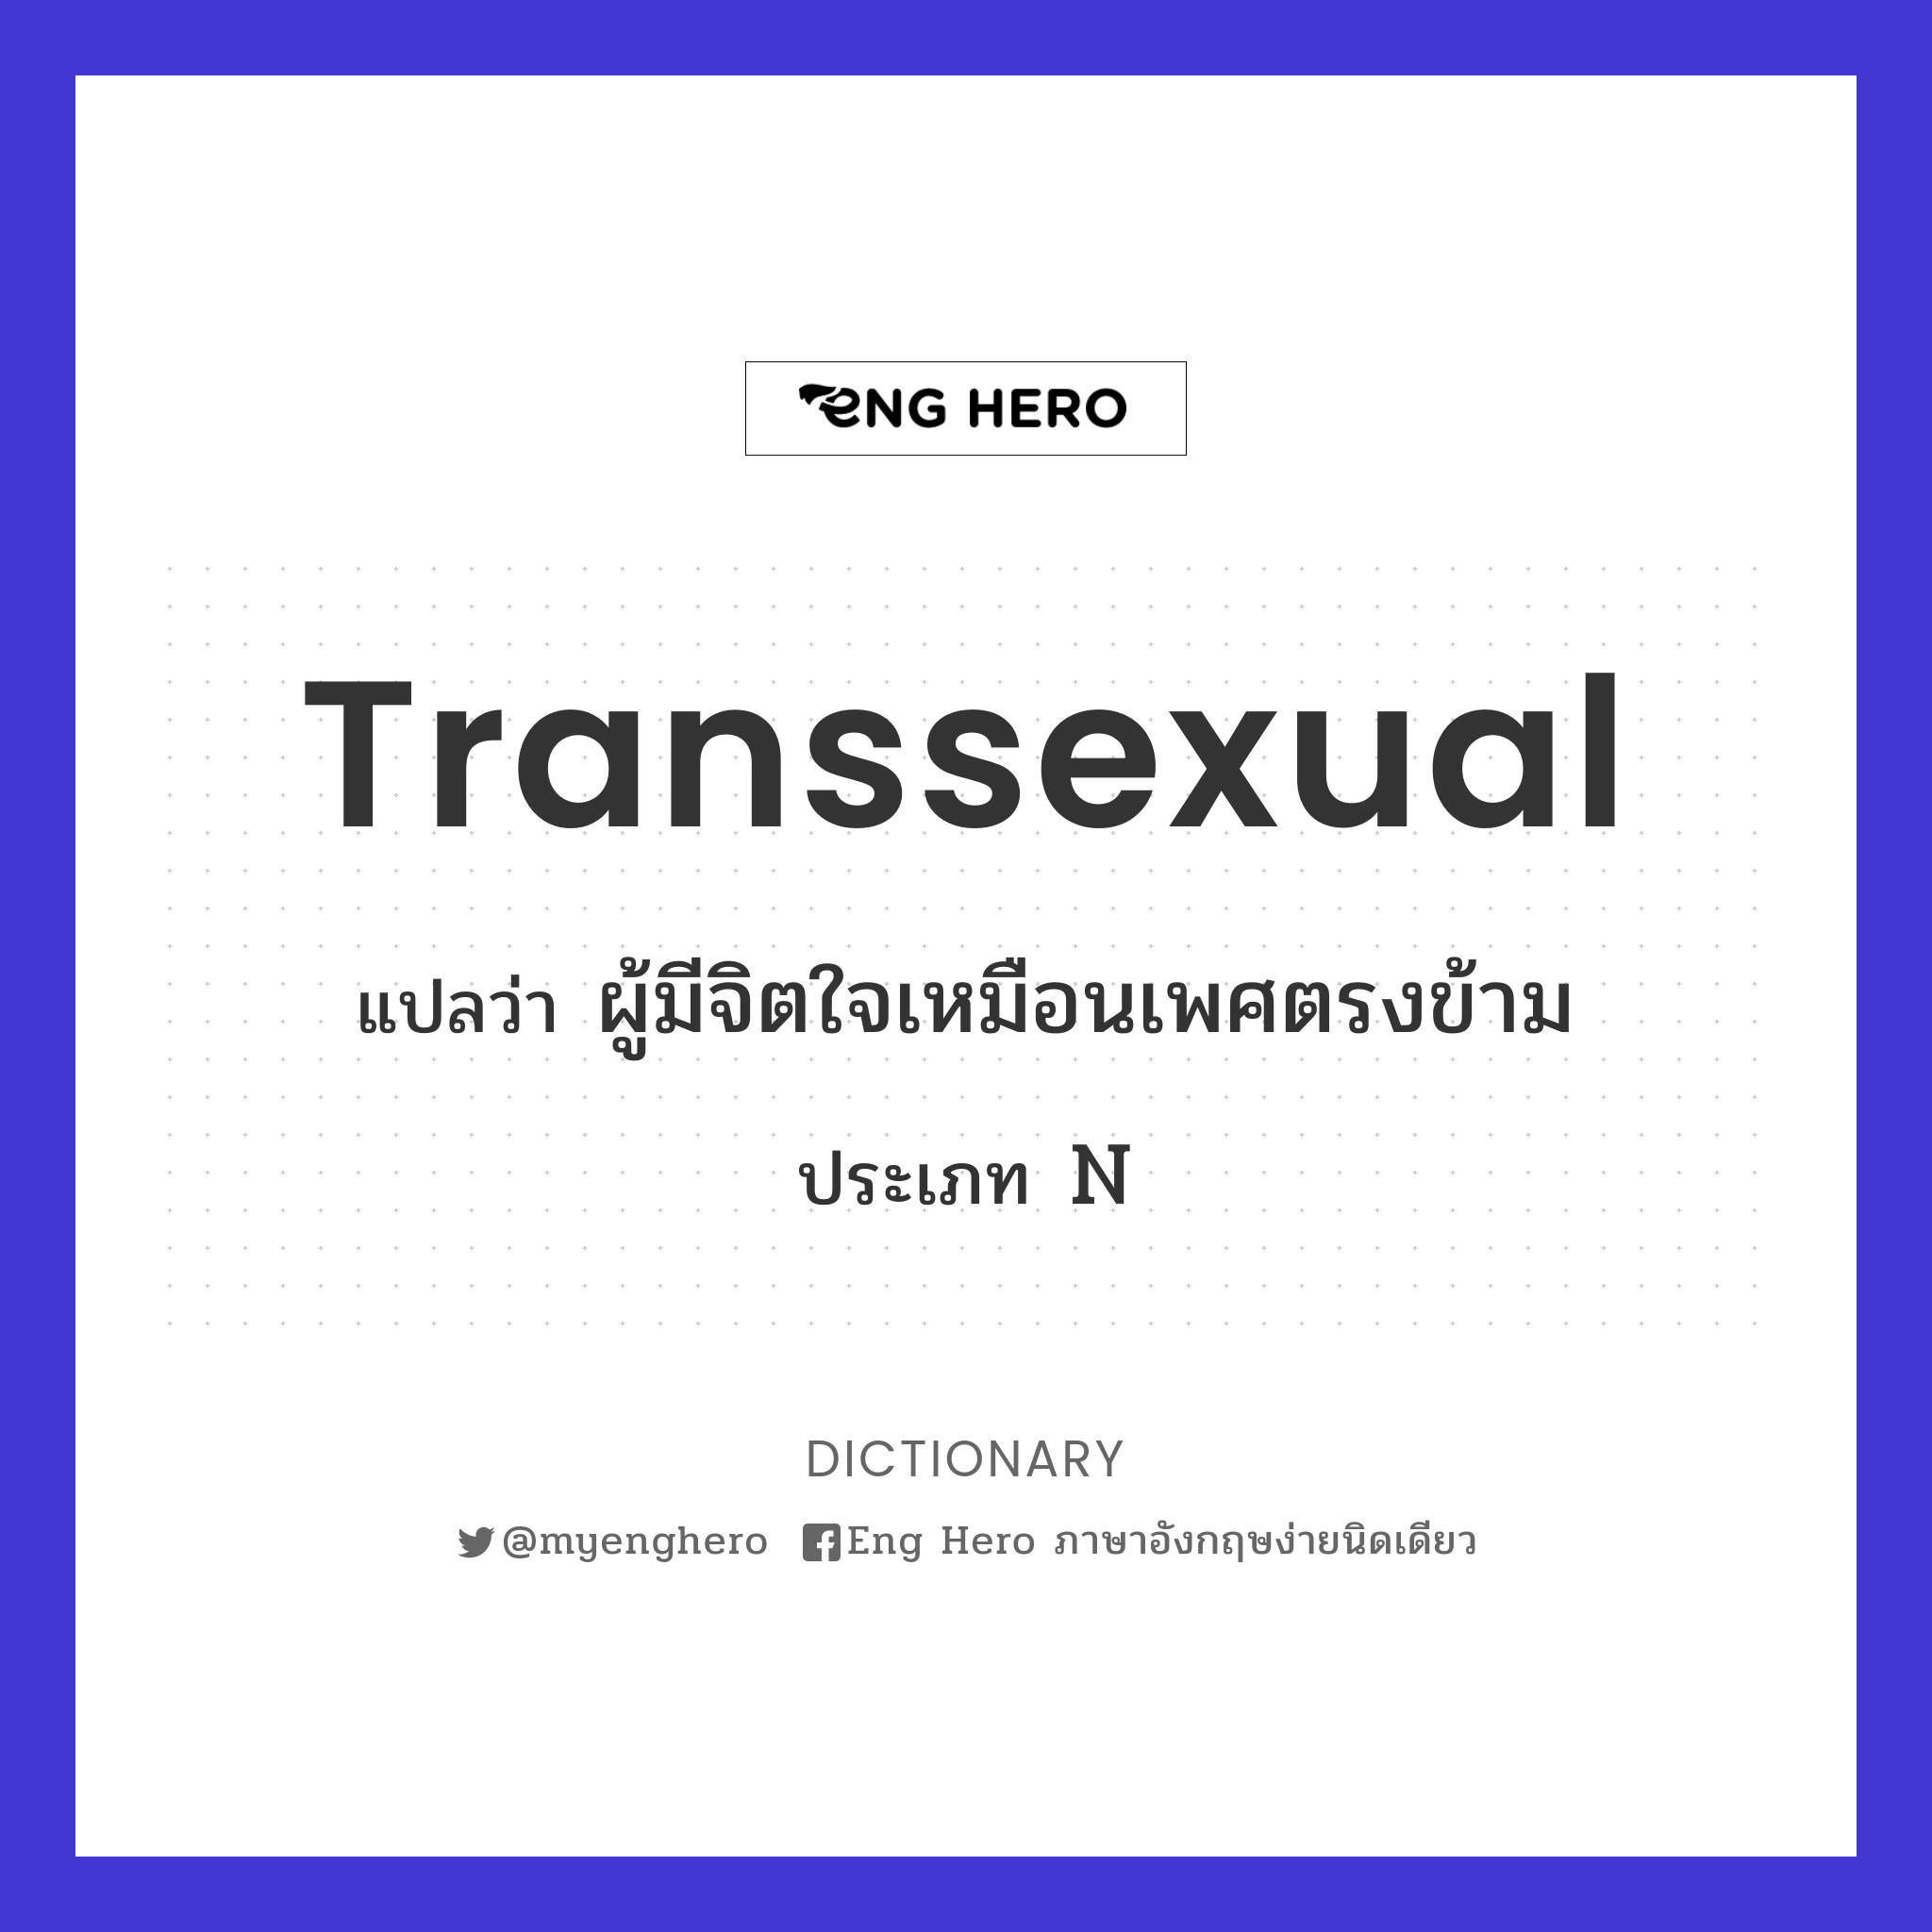 transsexual